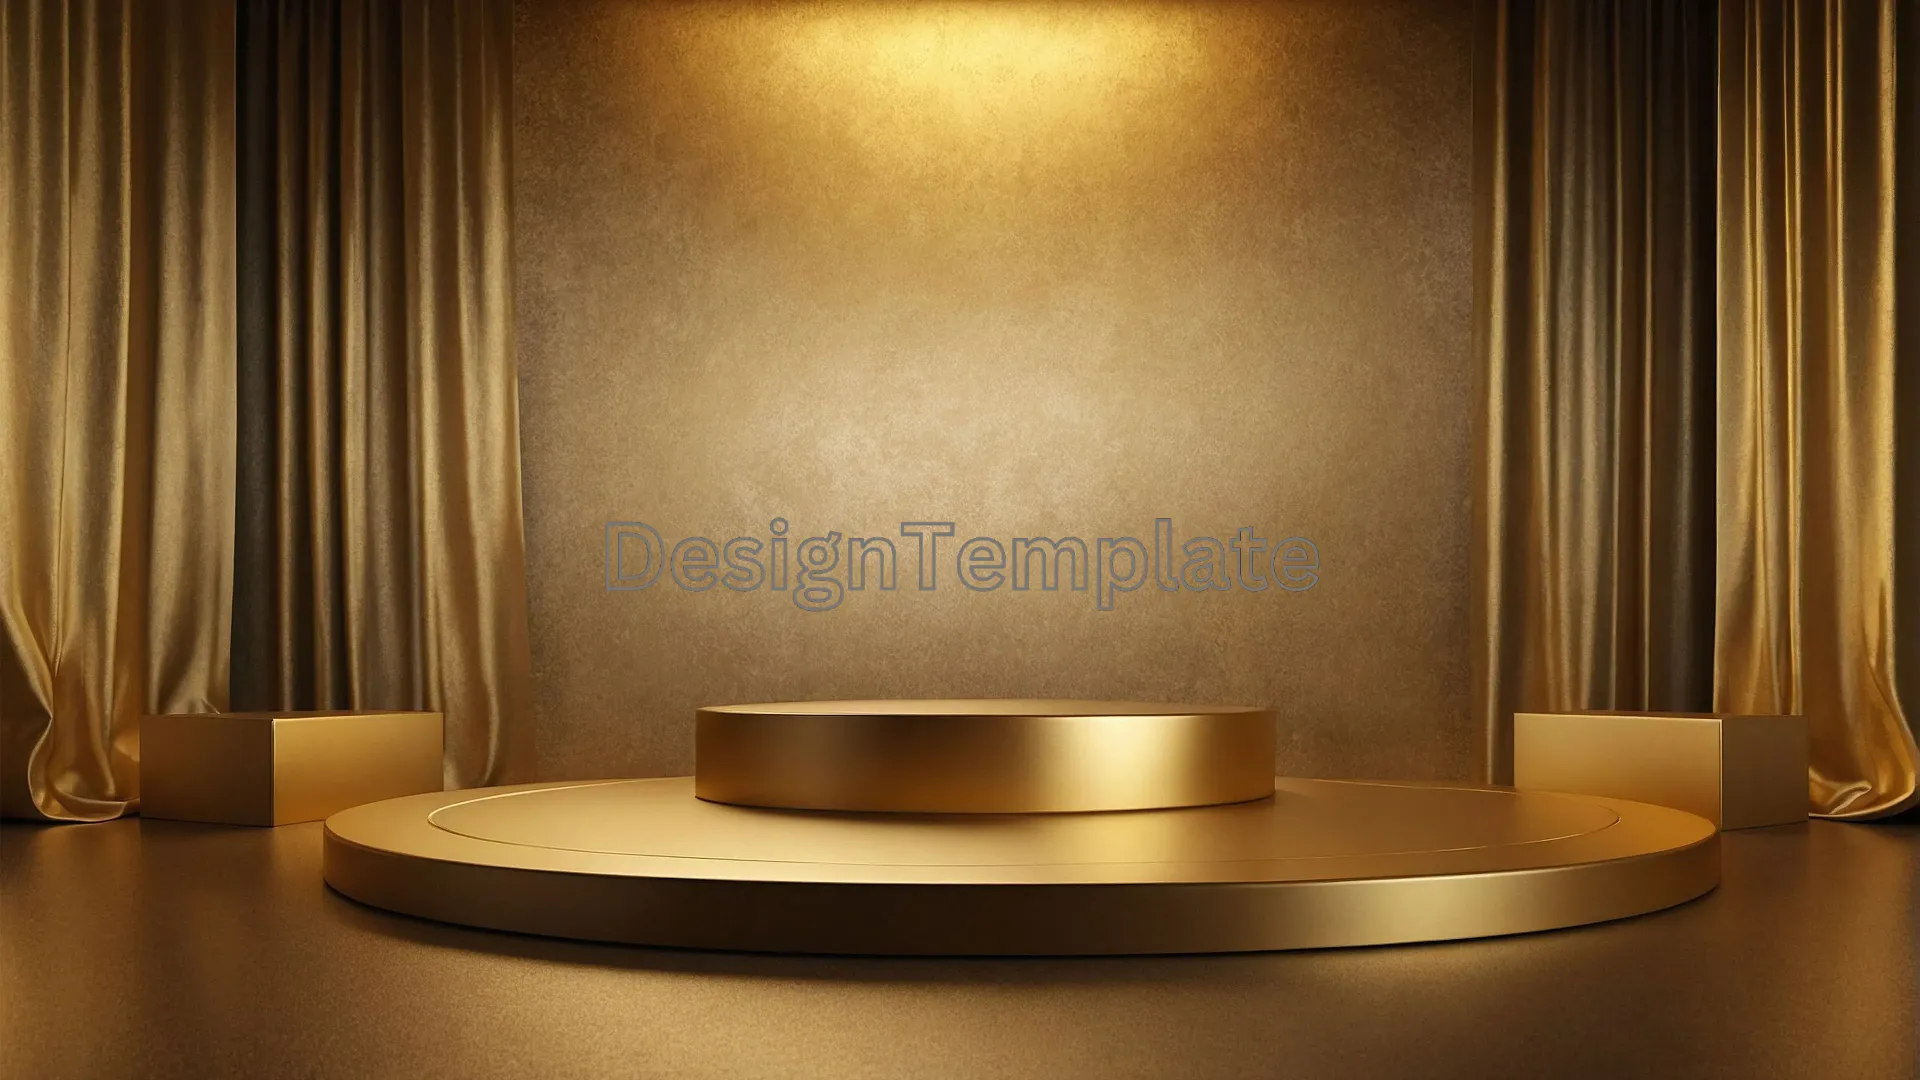 Award Show Golden Podium with Draped Curtains Background image